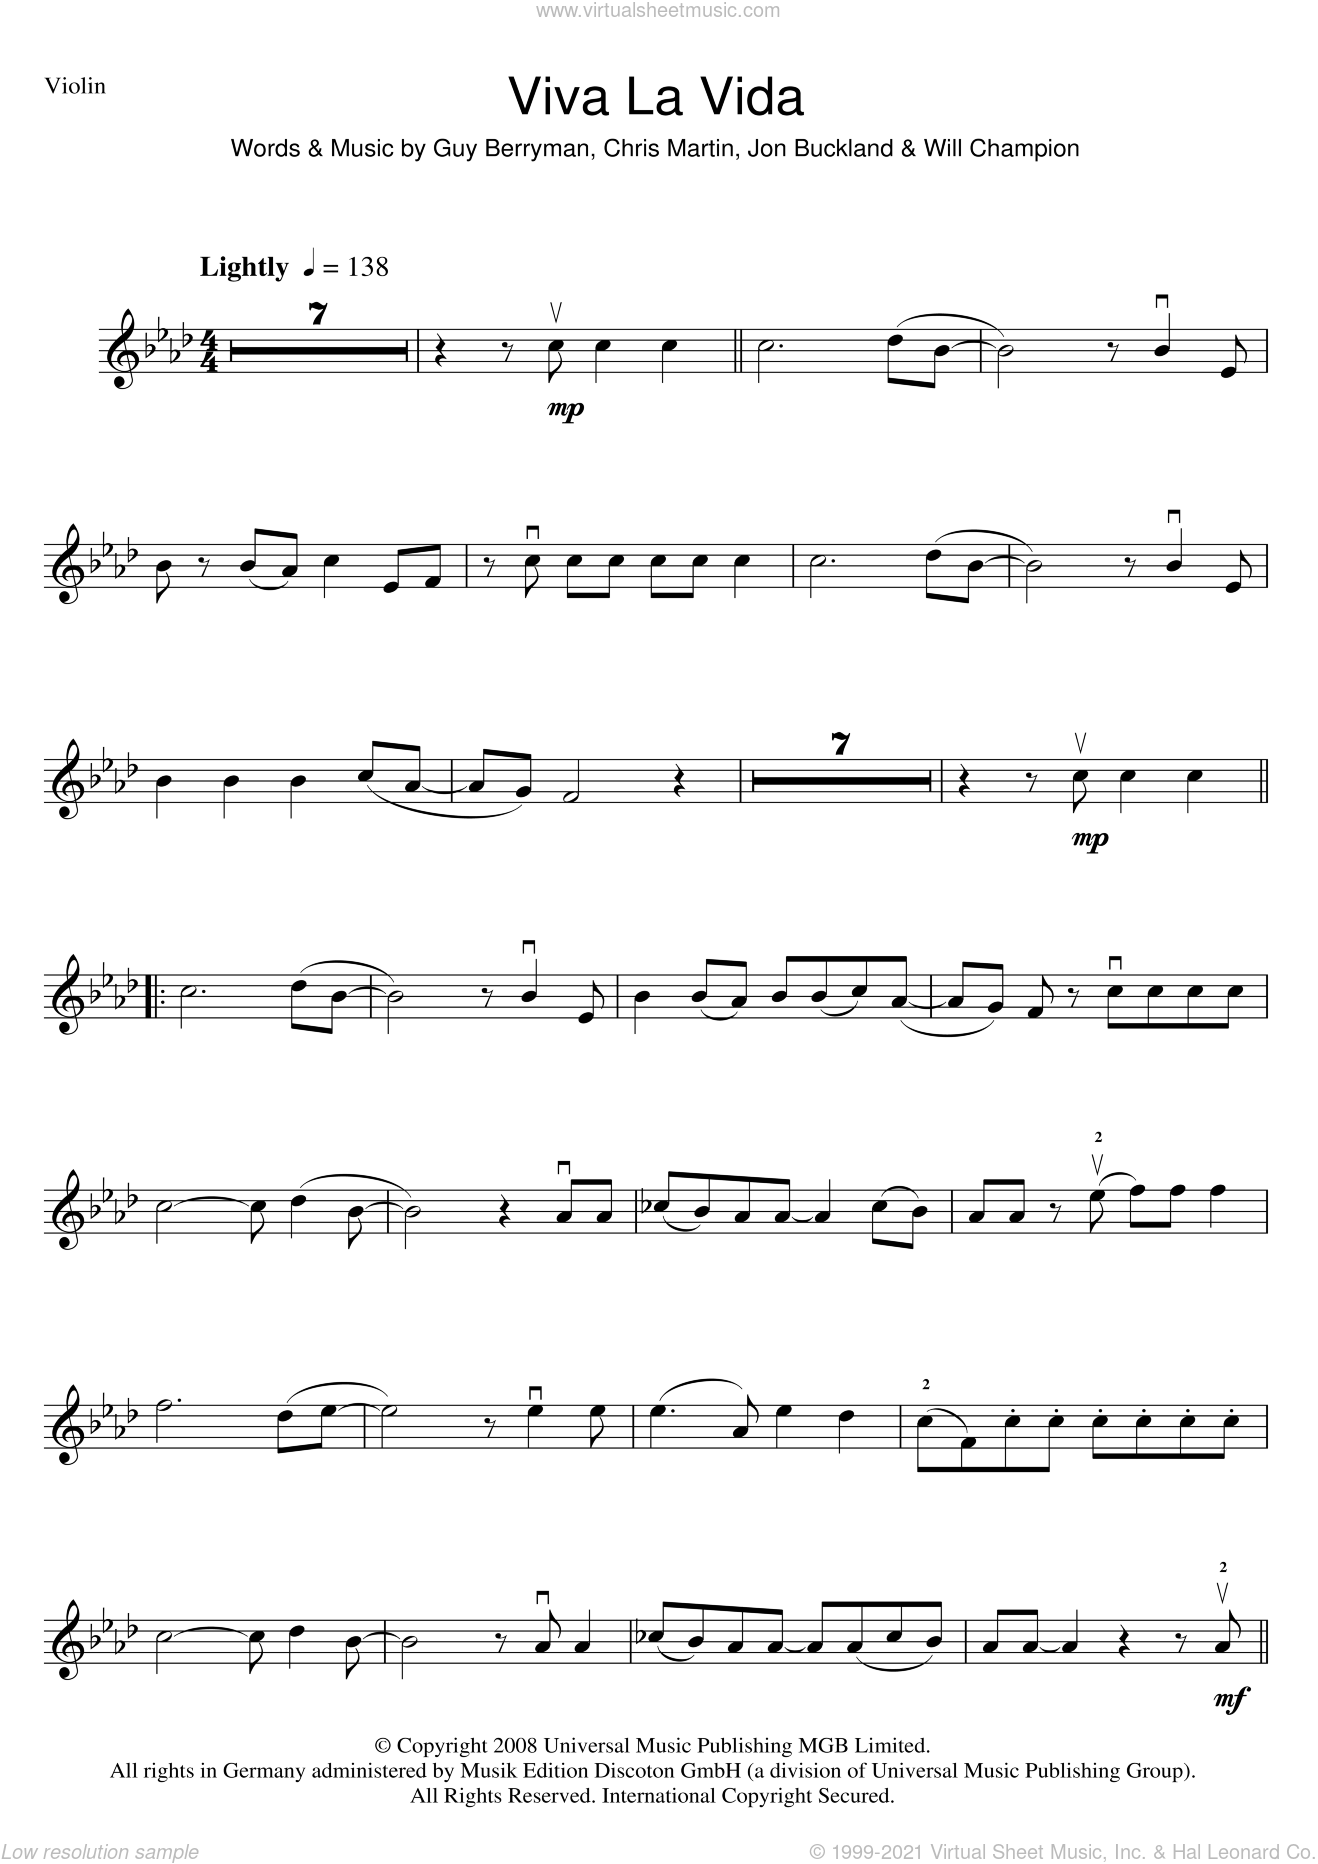 Coldplay - Viva La Vida sheet music for violin solo [PDF]